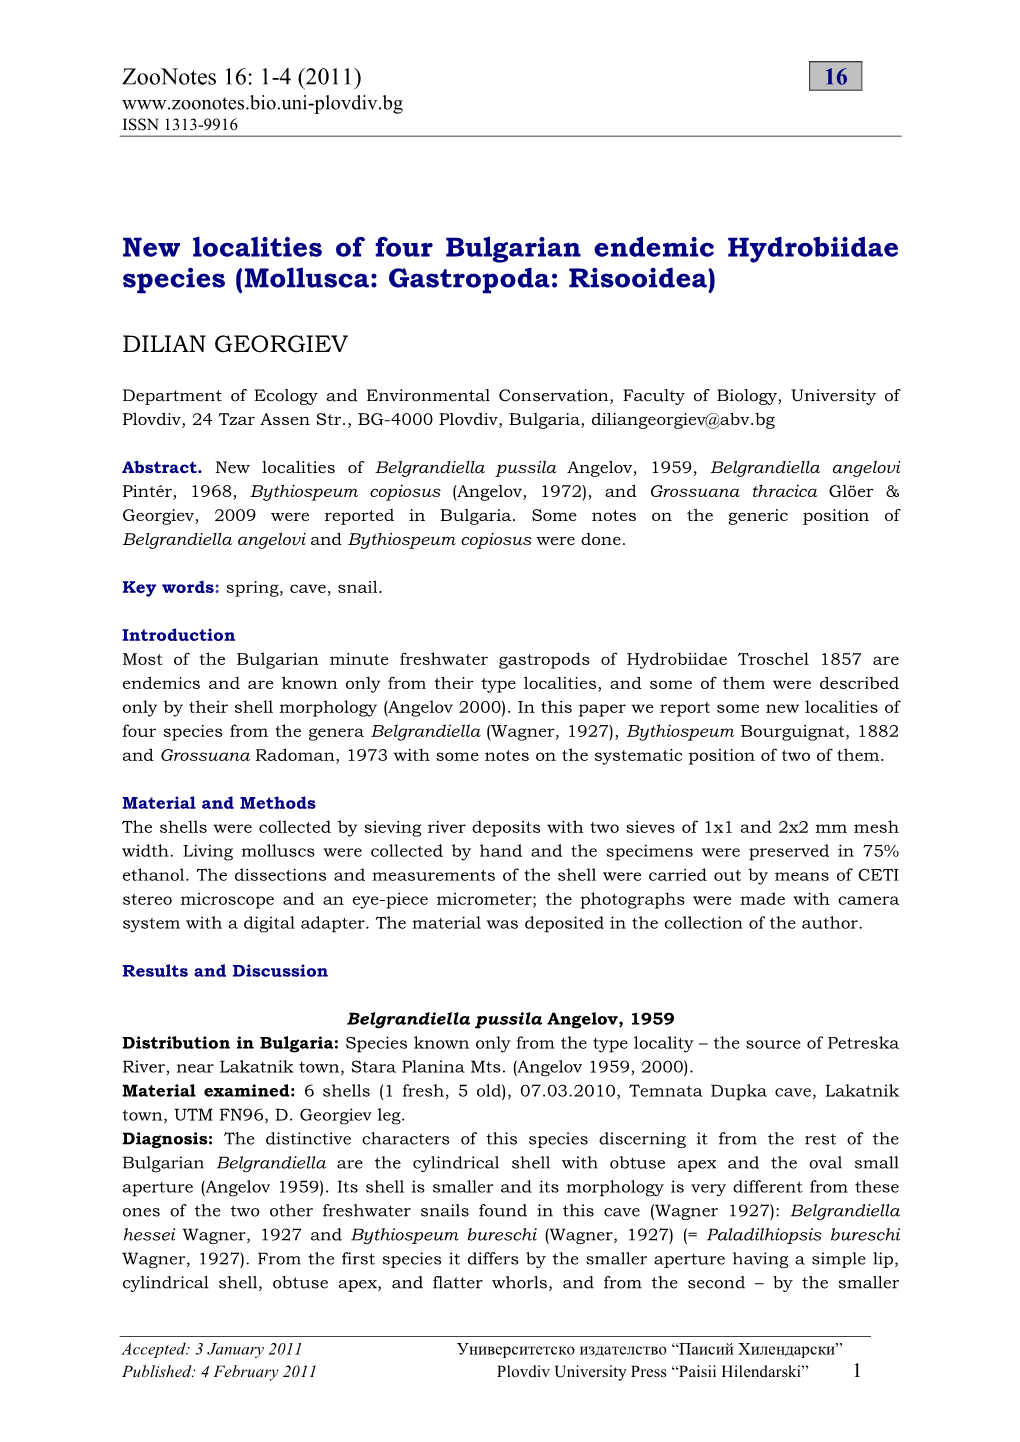 New Localities of Four Bulgarian Endemic Hydrobiidae Species (Mollusca: Gastropoda: Risooidea)